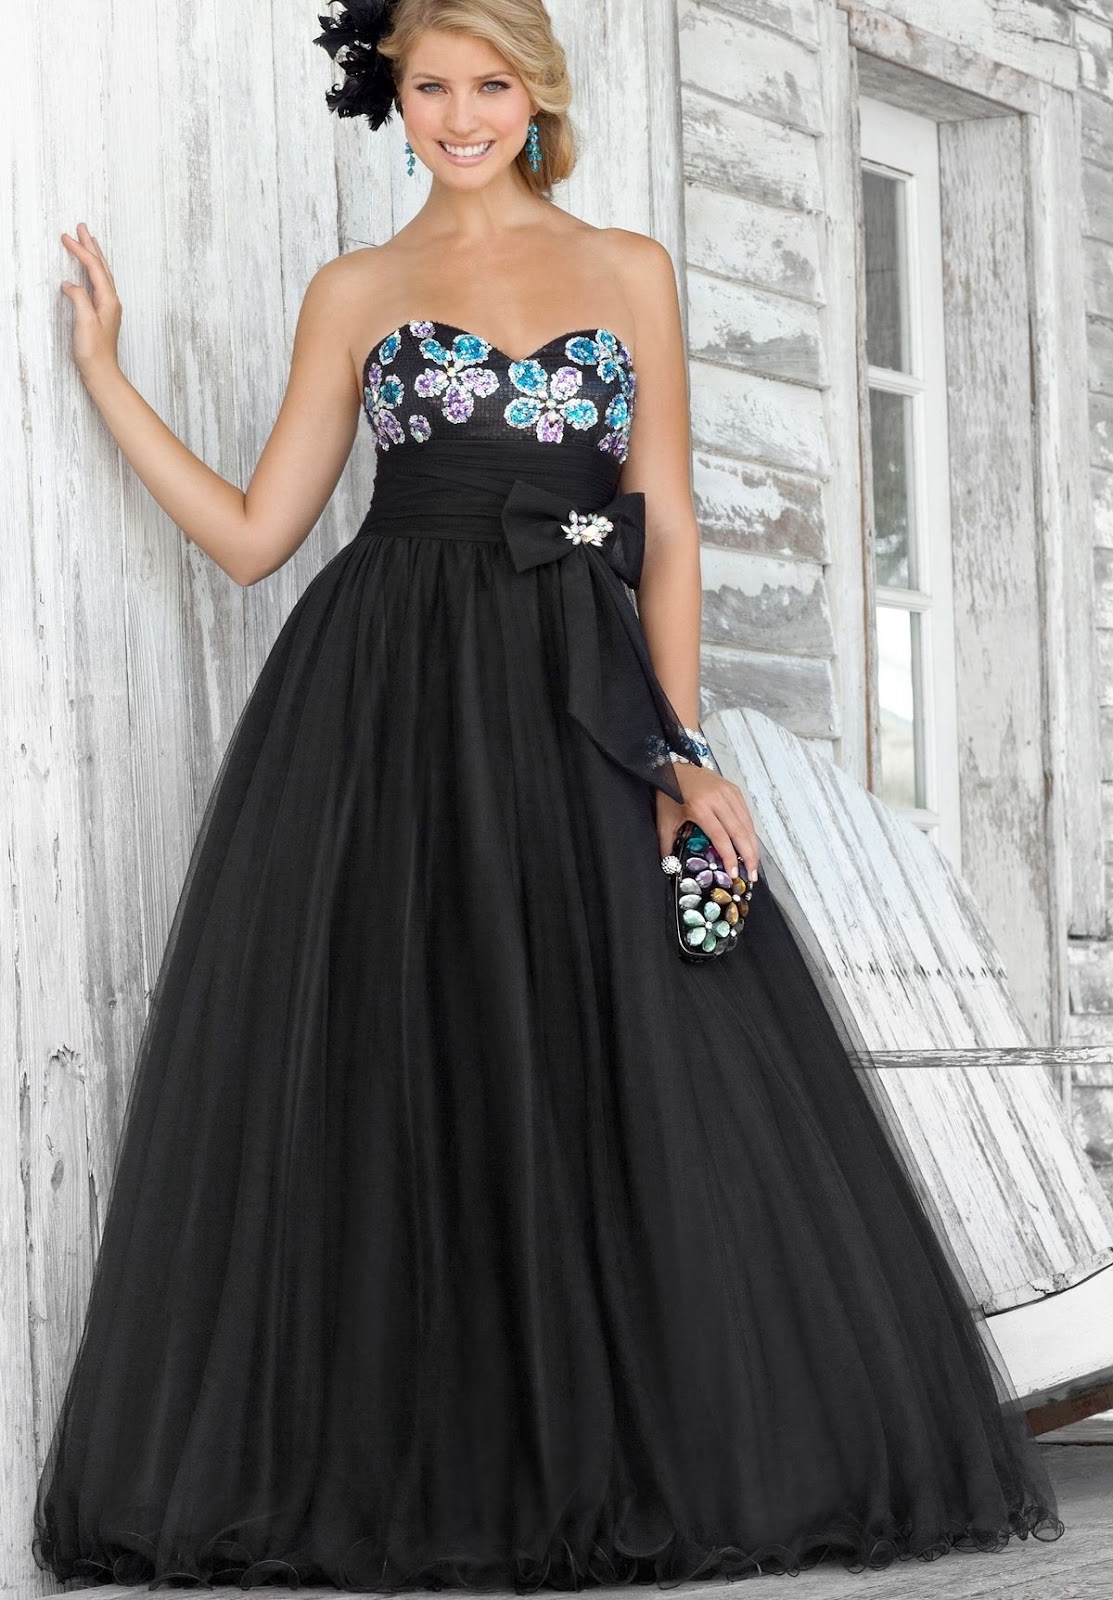 WhiteAzalea Ball Gowns: Black Ball Gown Prom Dresses